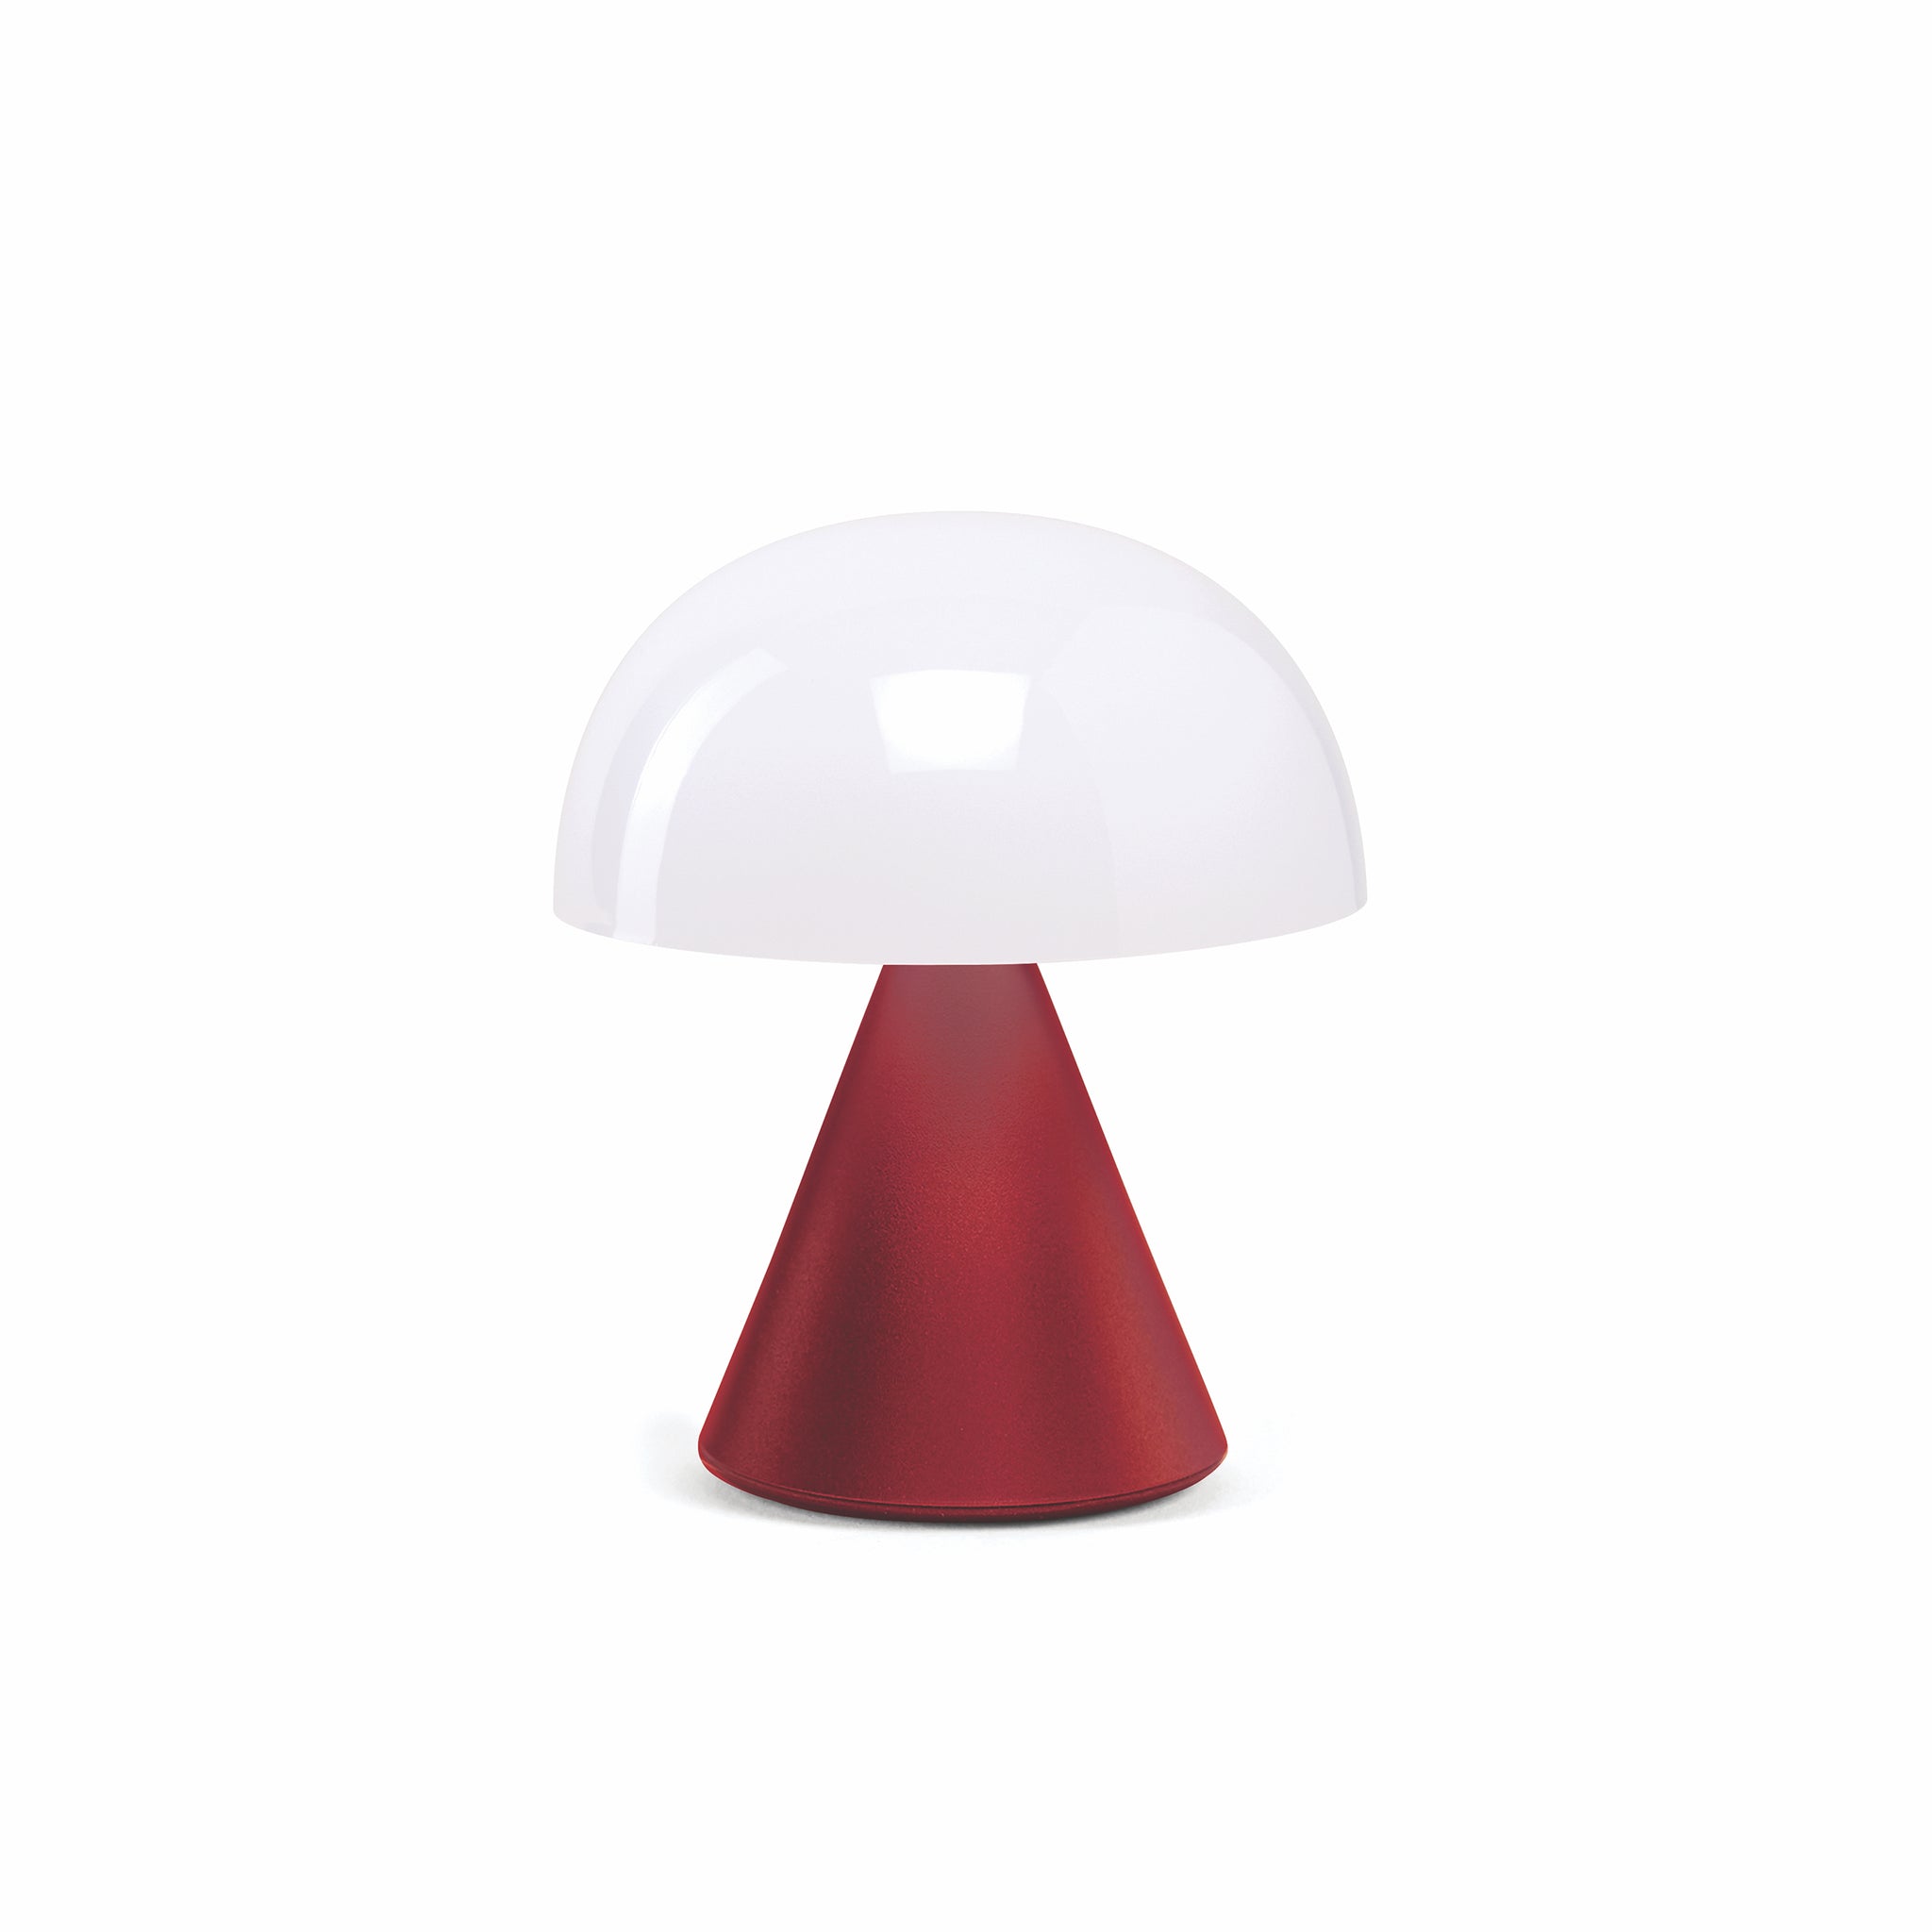 Lexon Mina Small Donkerrood│Oplaadbare LED-Lamp│art. LH60DR│vooraanzicht met licht uit